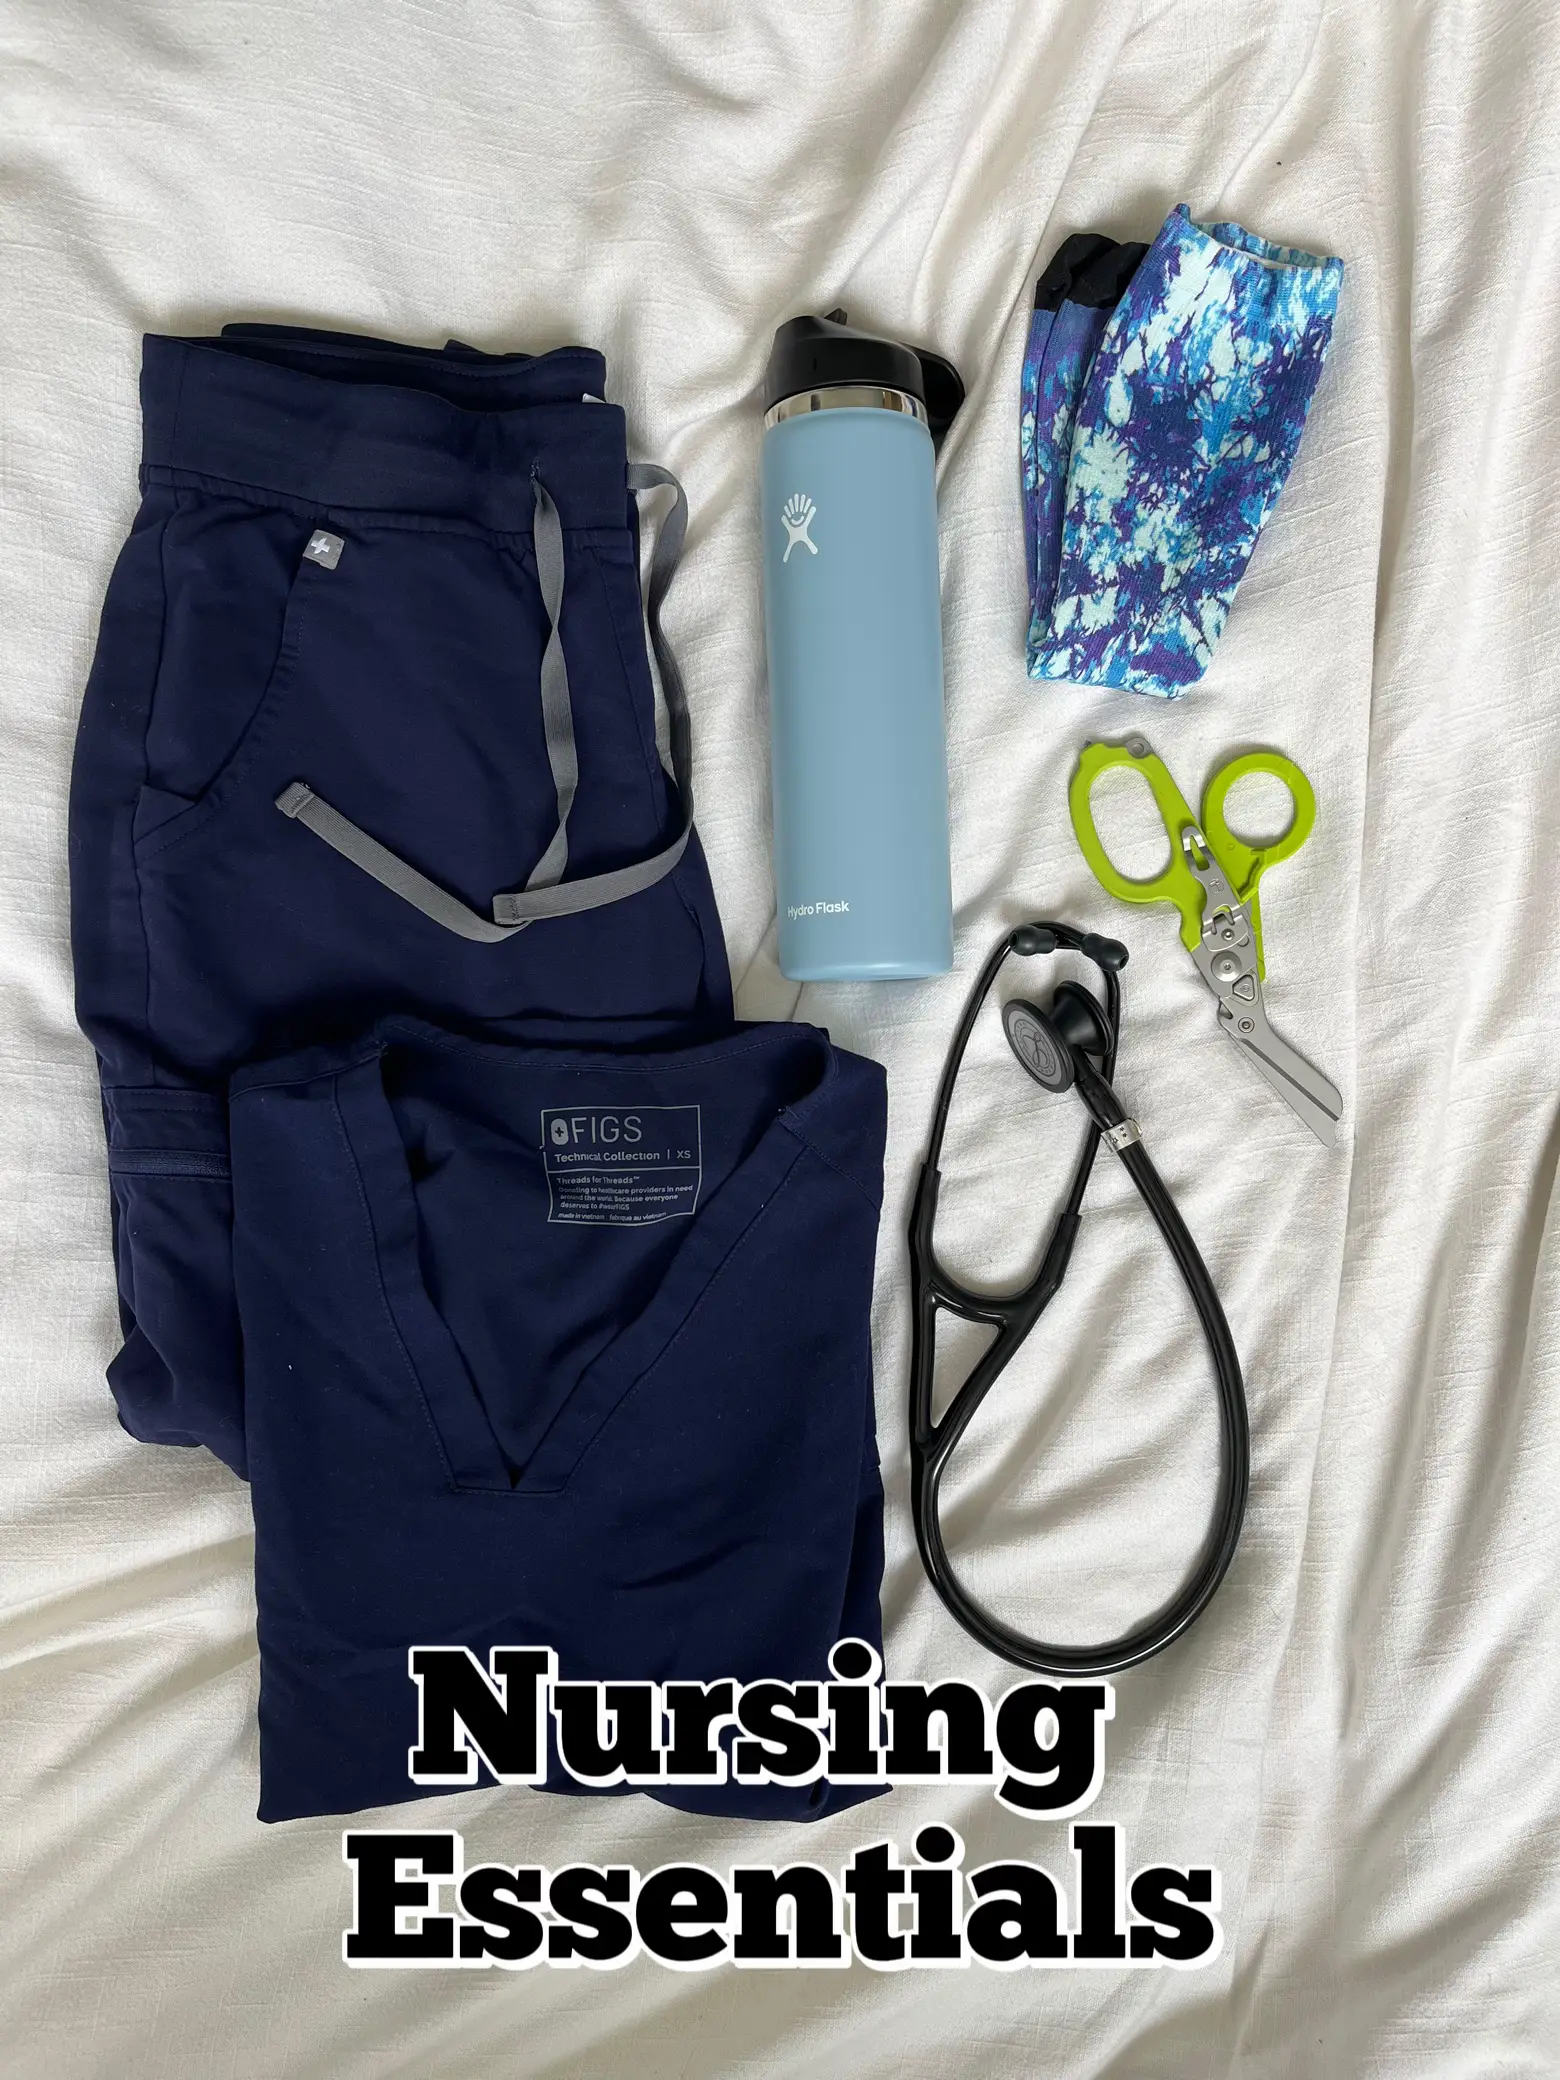 Nursing Essentials, Gallery posted by shayna prebish